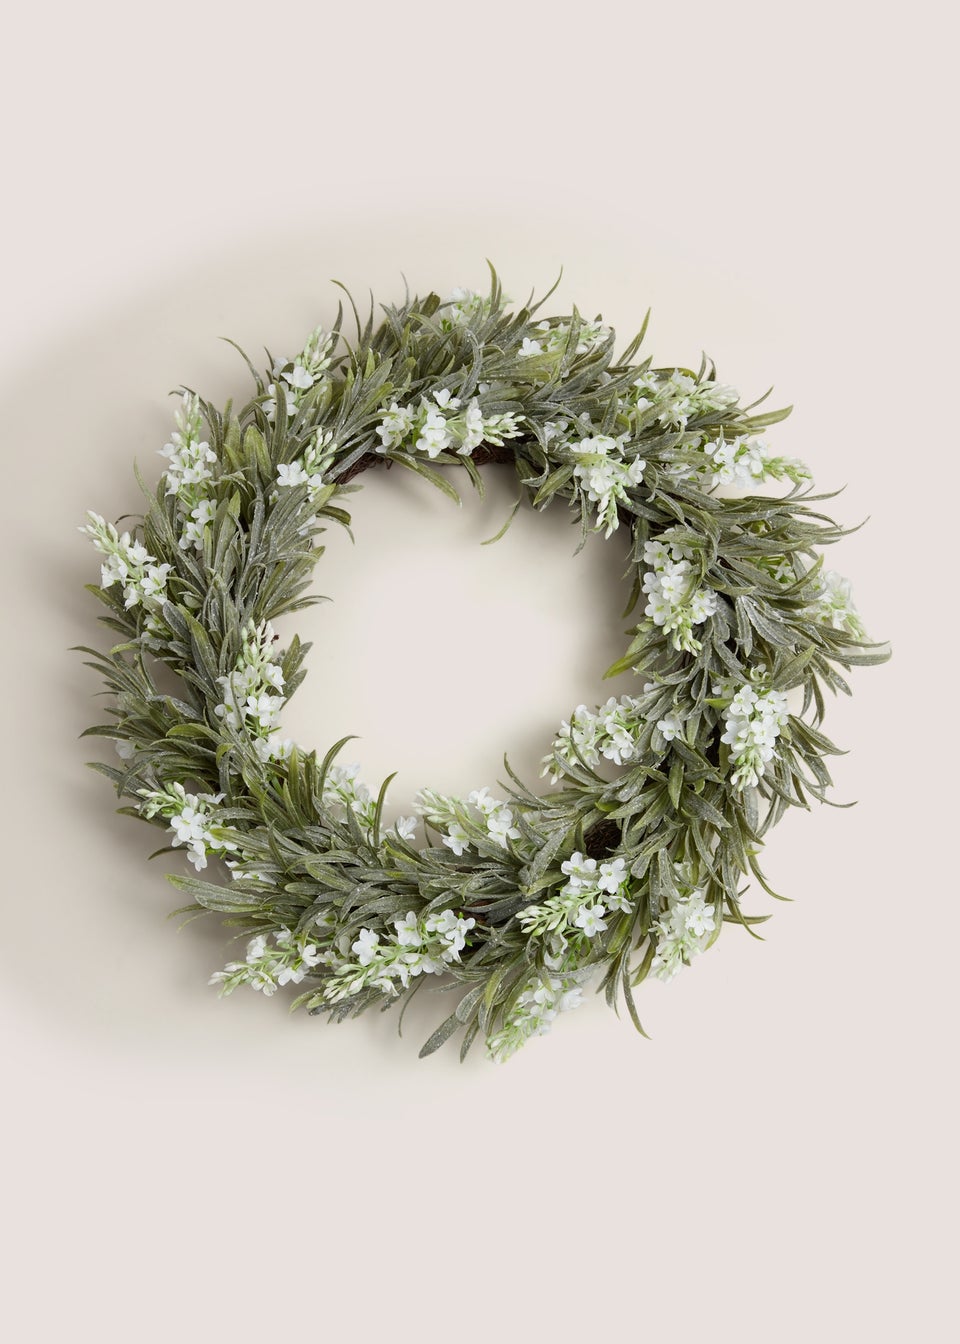 Lavender Wreath (55cm x 55 cmx 12cm)